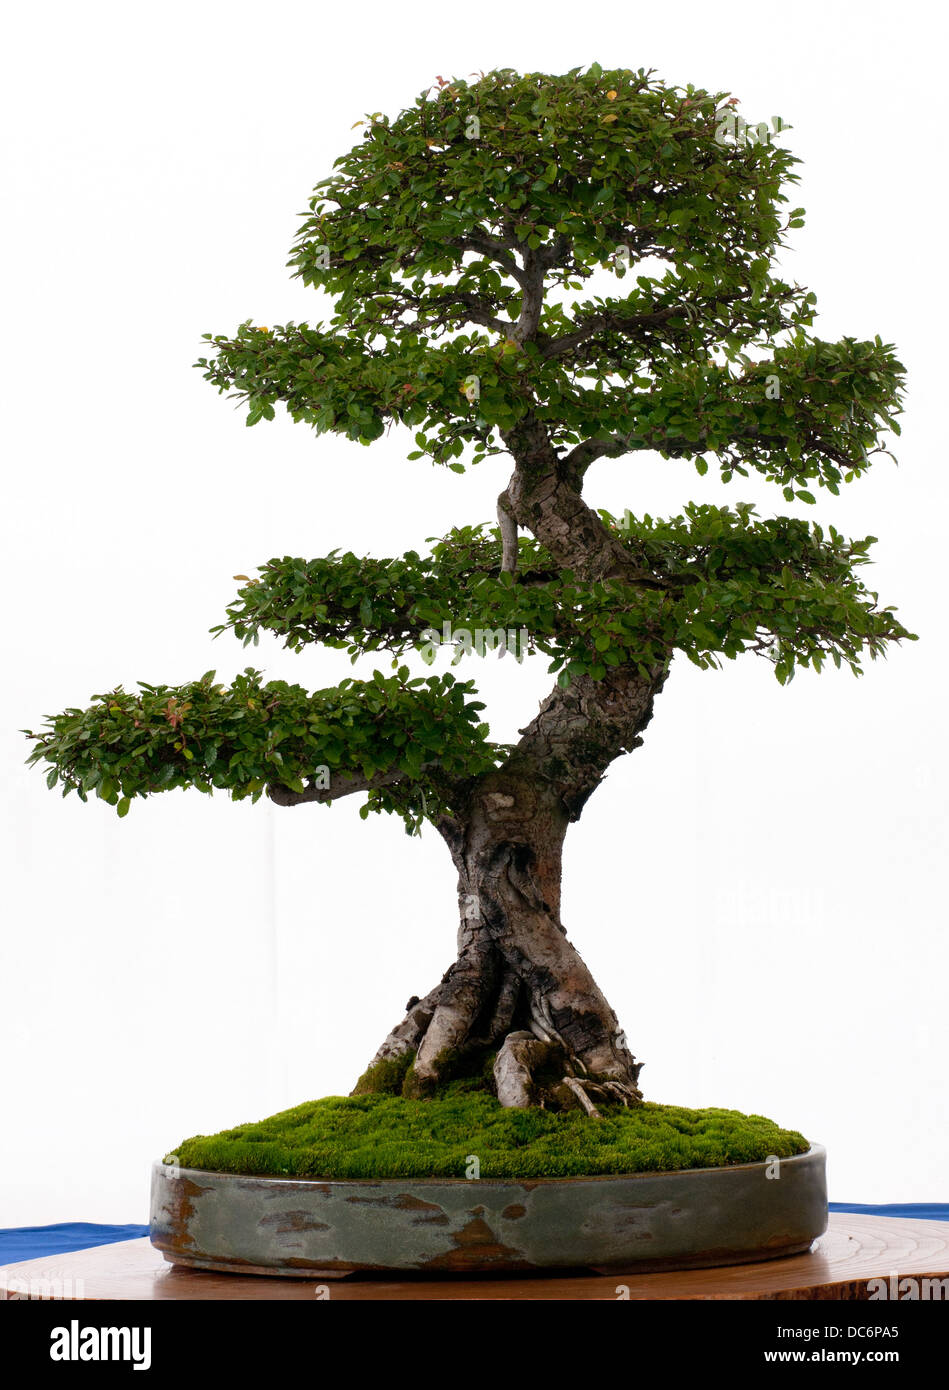 Elm tree (Ulmus parvifolia) as bonsai in a pot Stock Photo